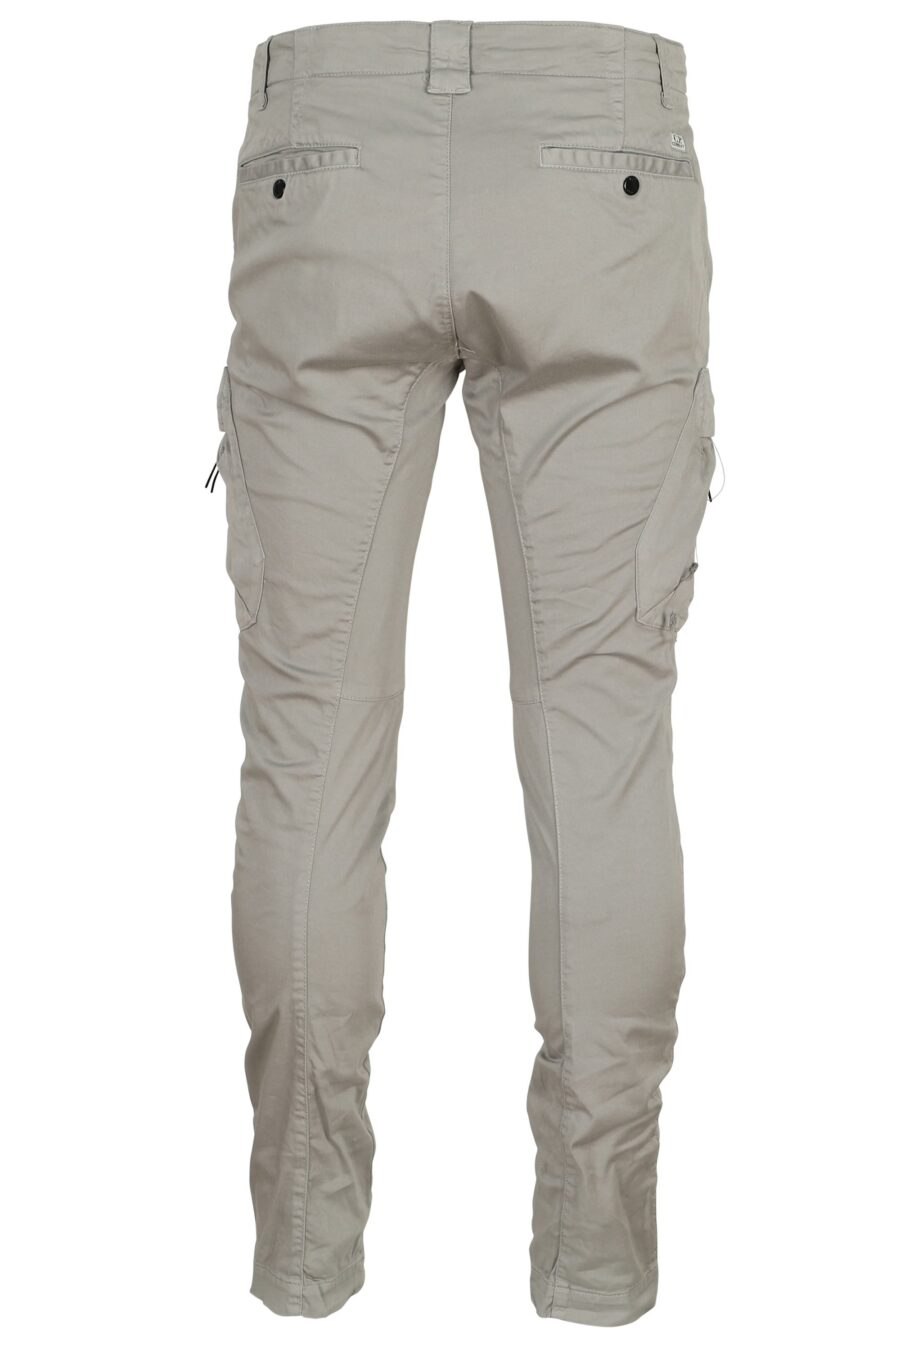 Pantalon cargo gris avec lentille logo - 7620943722895 2